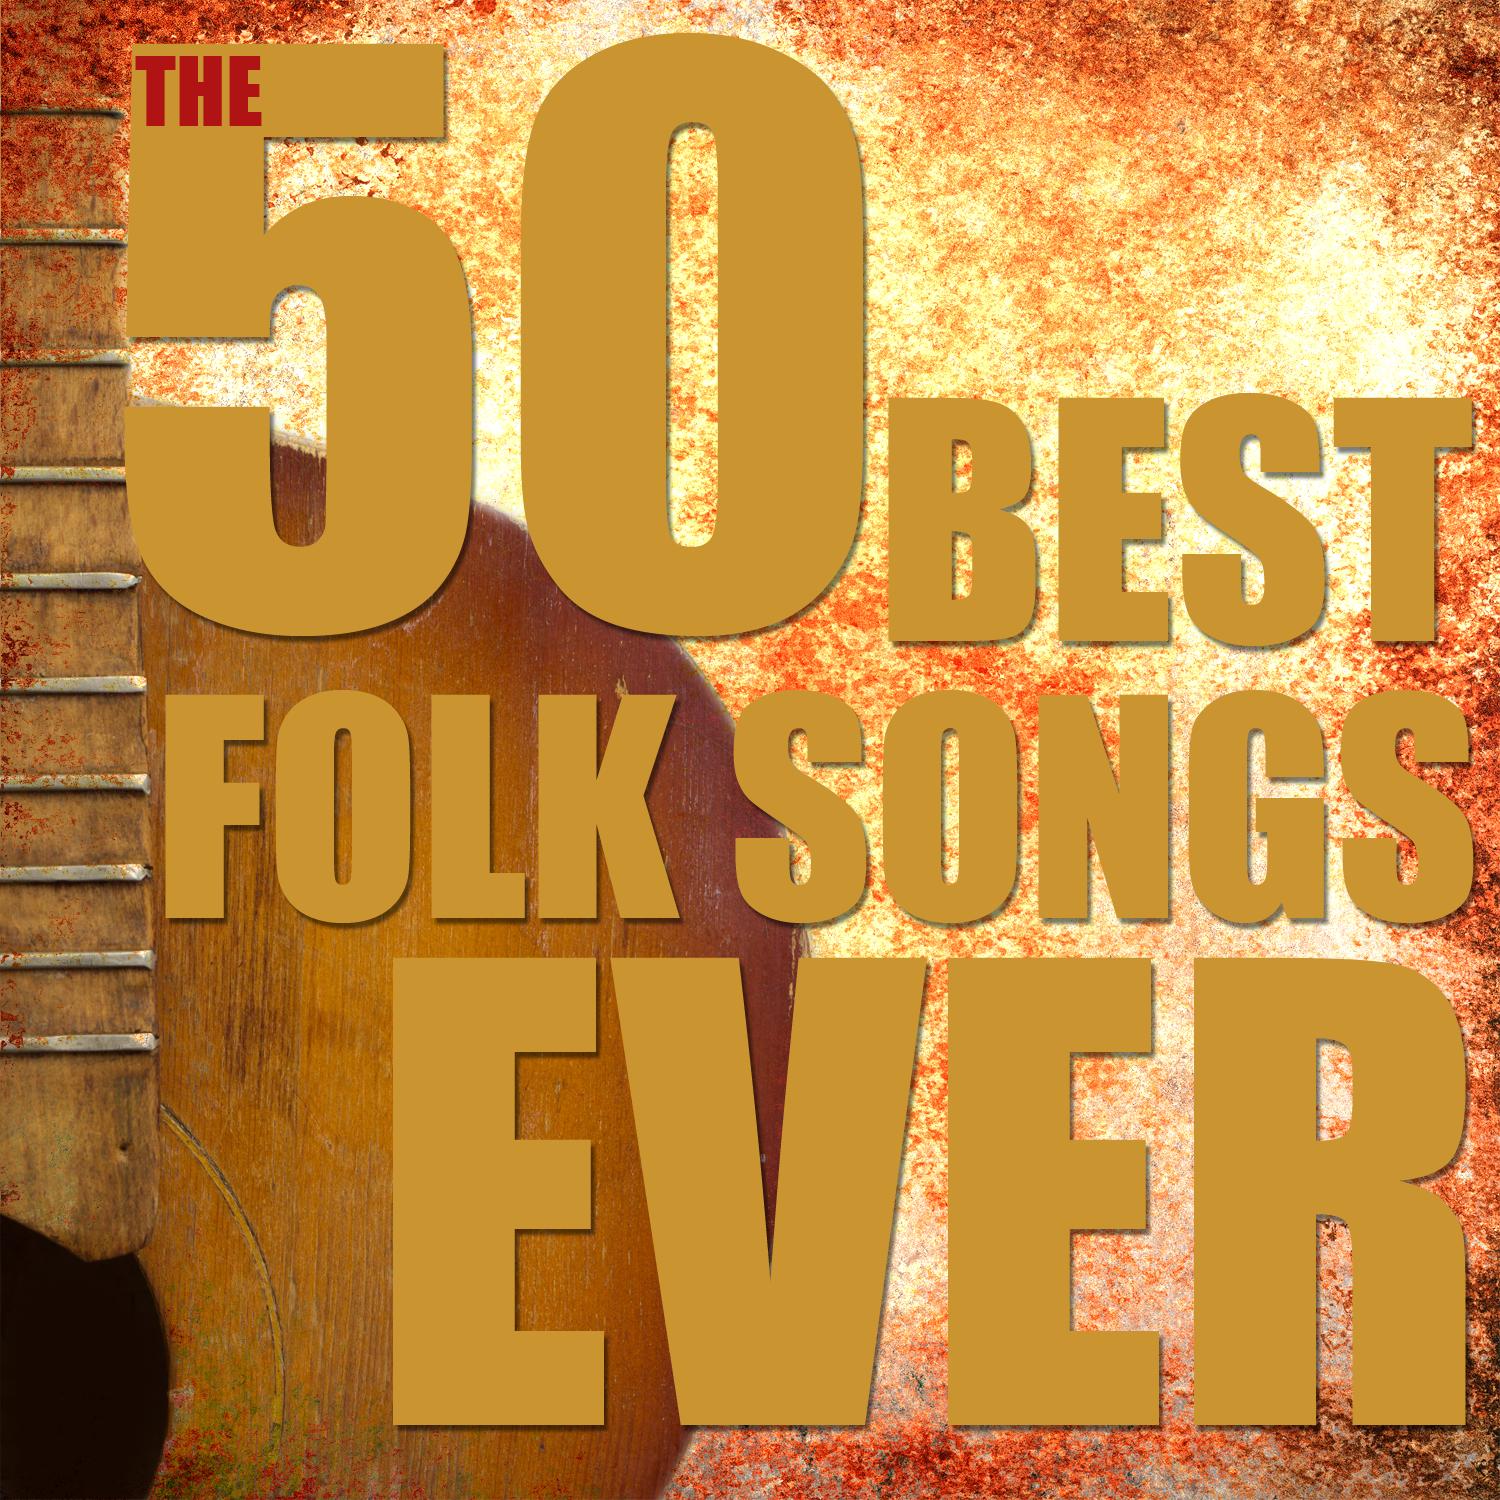 The 50 Best Folk Songs Ever